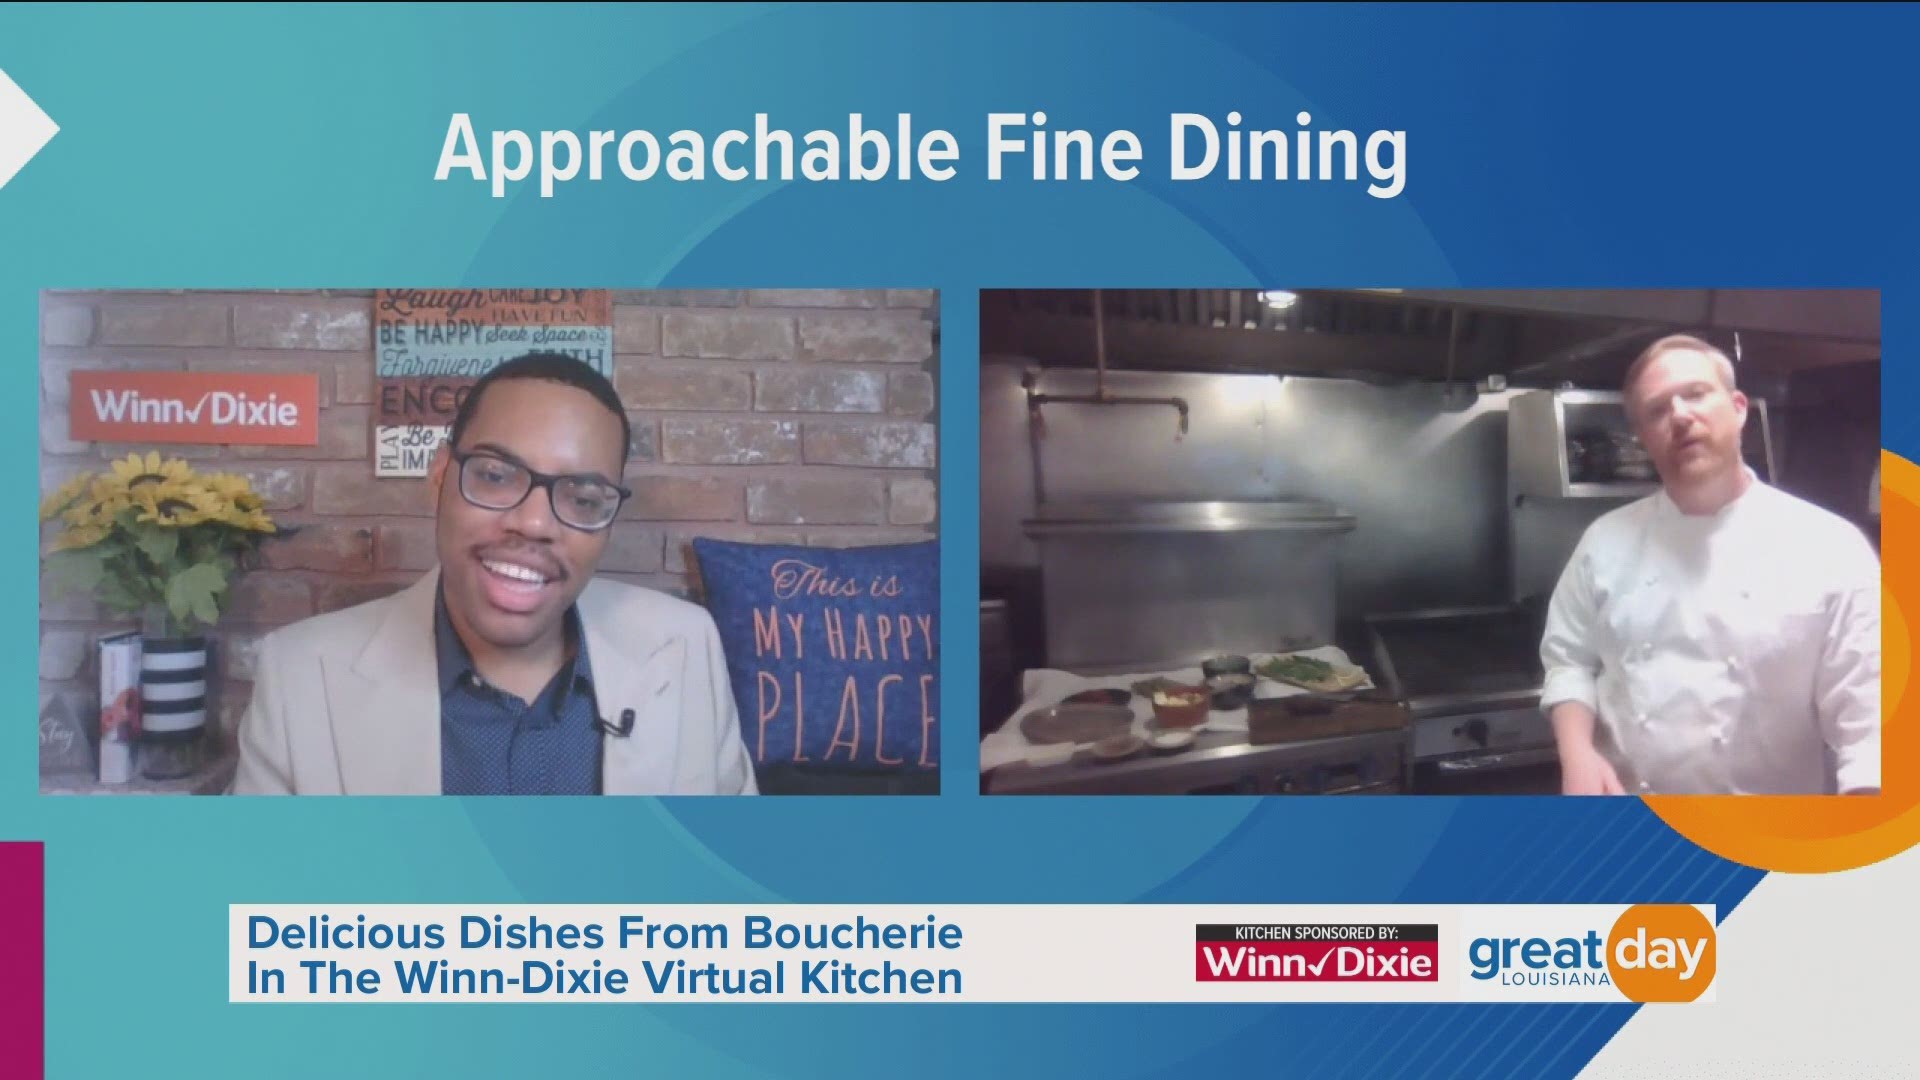 The executive chef of Boucherie prepared a steak recipe in the Winn-Dixie virtual kitchen.